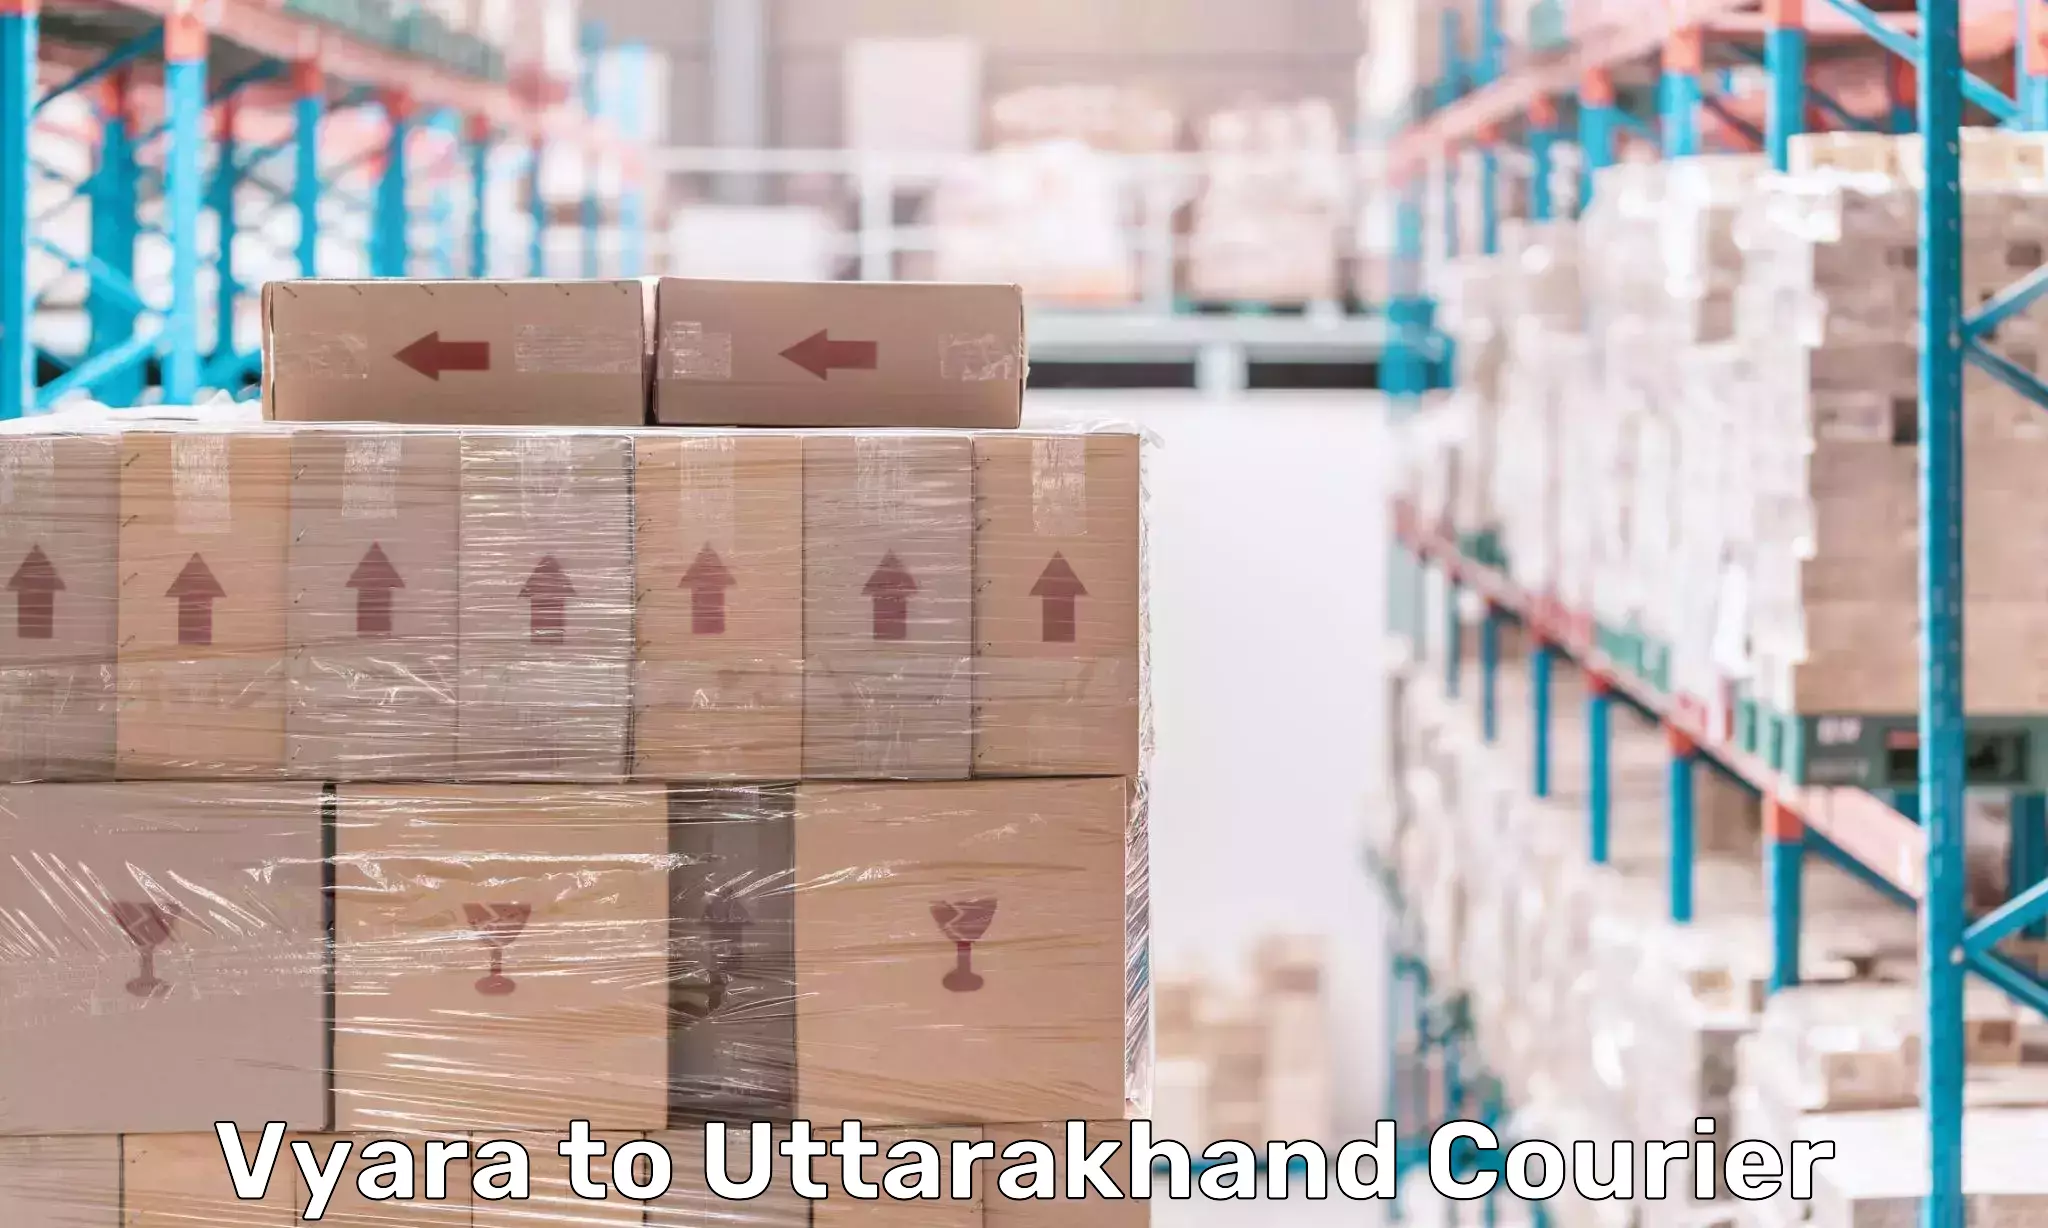 High-efficiency logistics Vyara to Uttarakhand